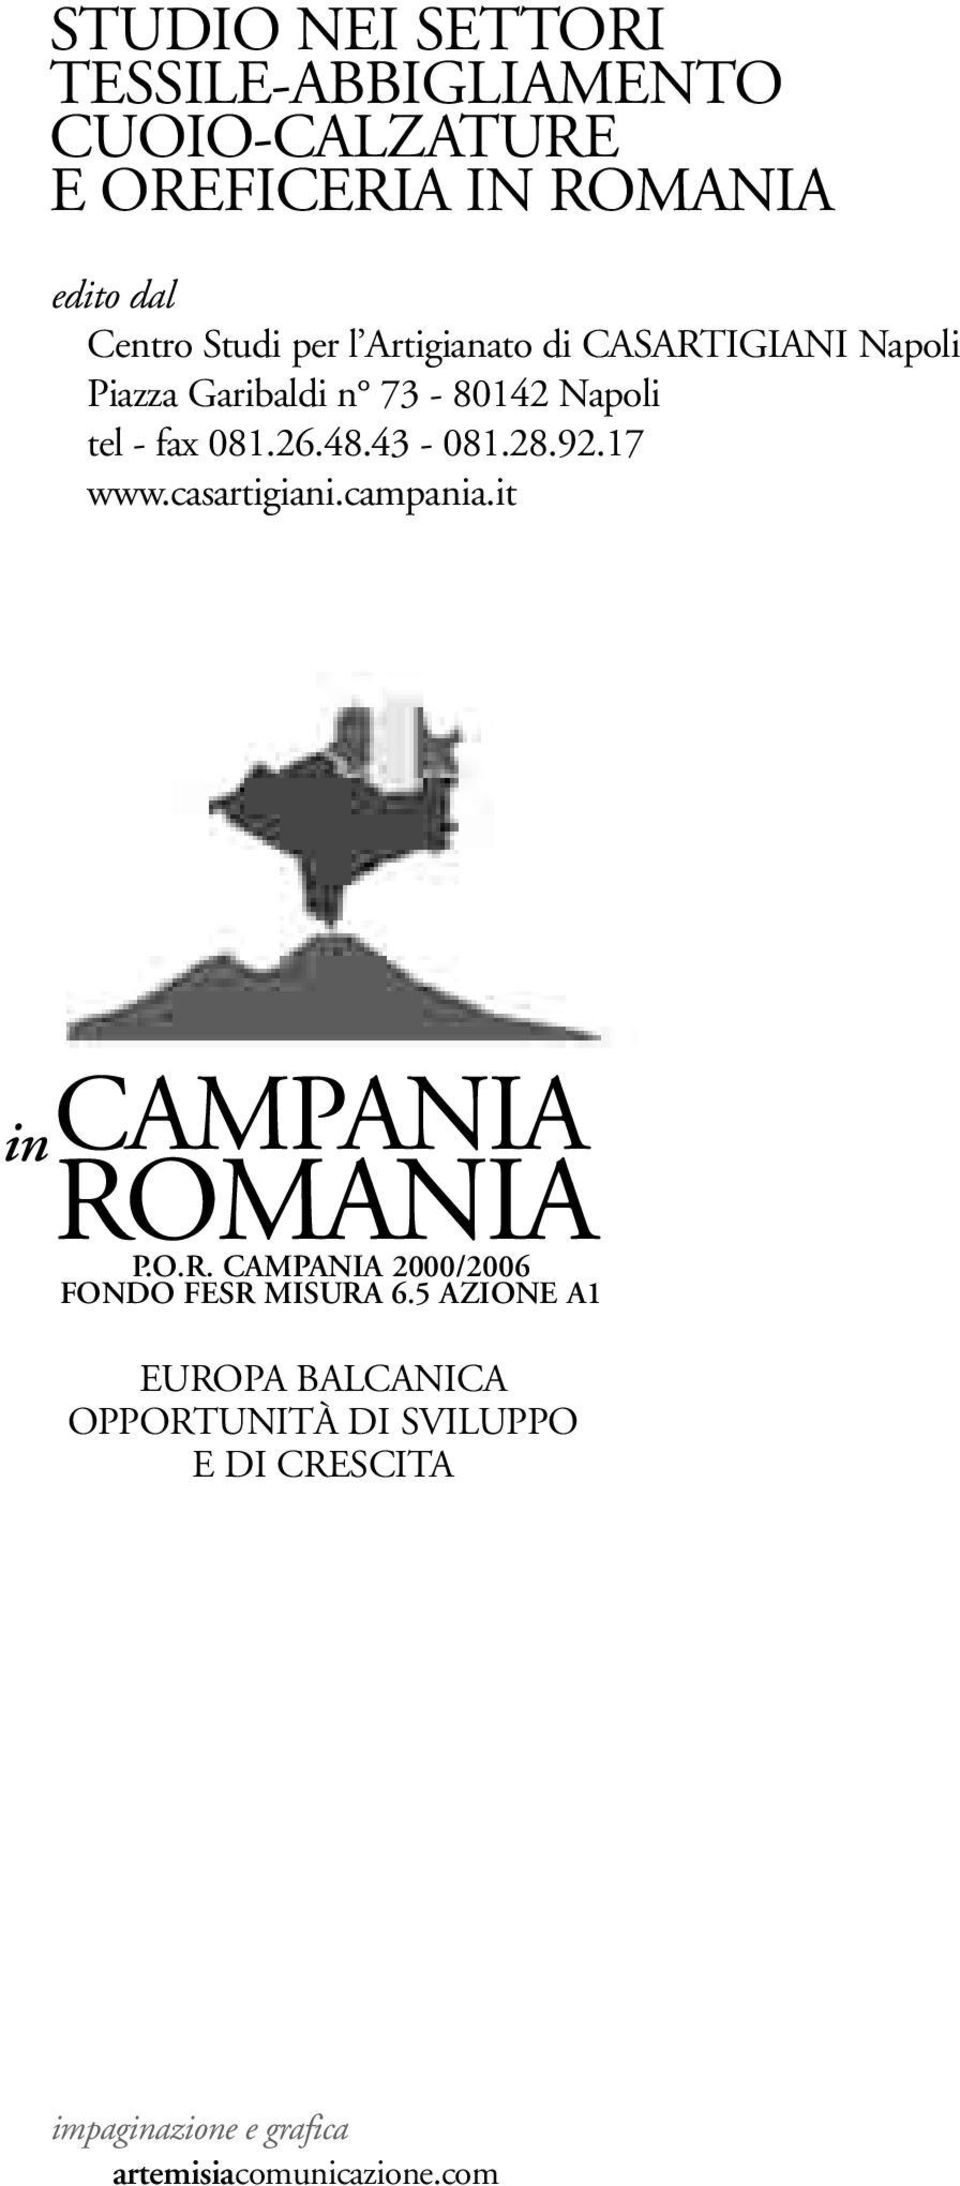 92.17 www.casartigiani.campania.it in CAMPANIA ROMANIA P.O.R. CAMPANIA 2000/2006 FONDO FESR MISURA 6.